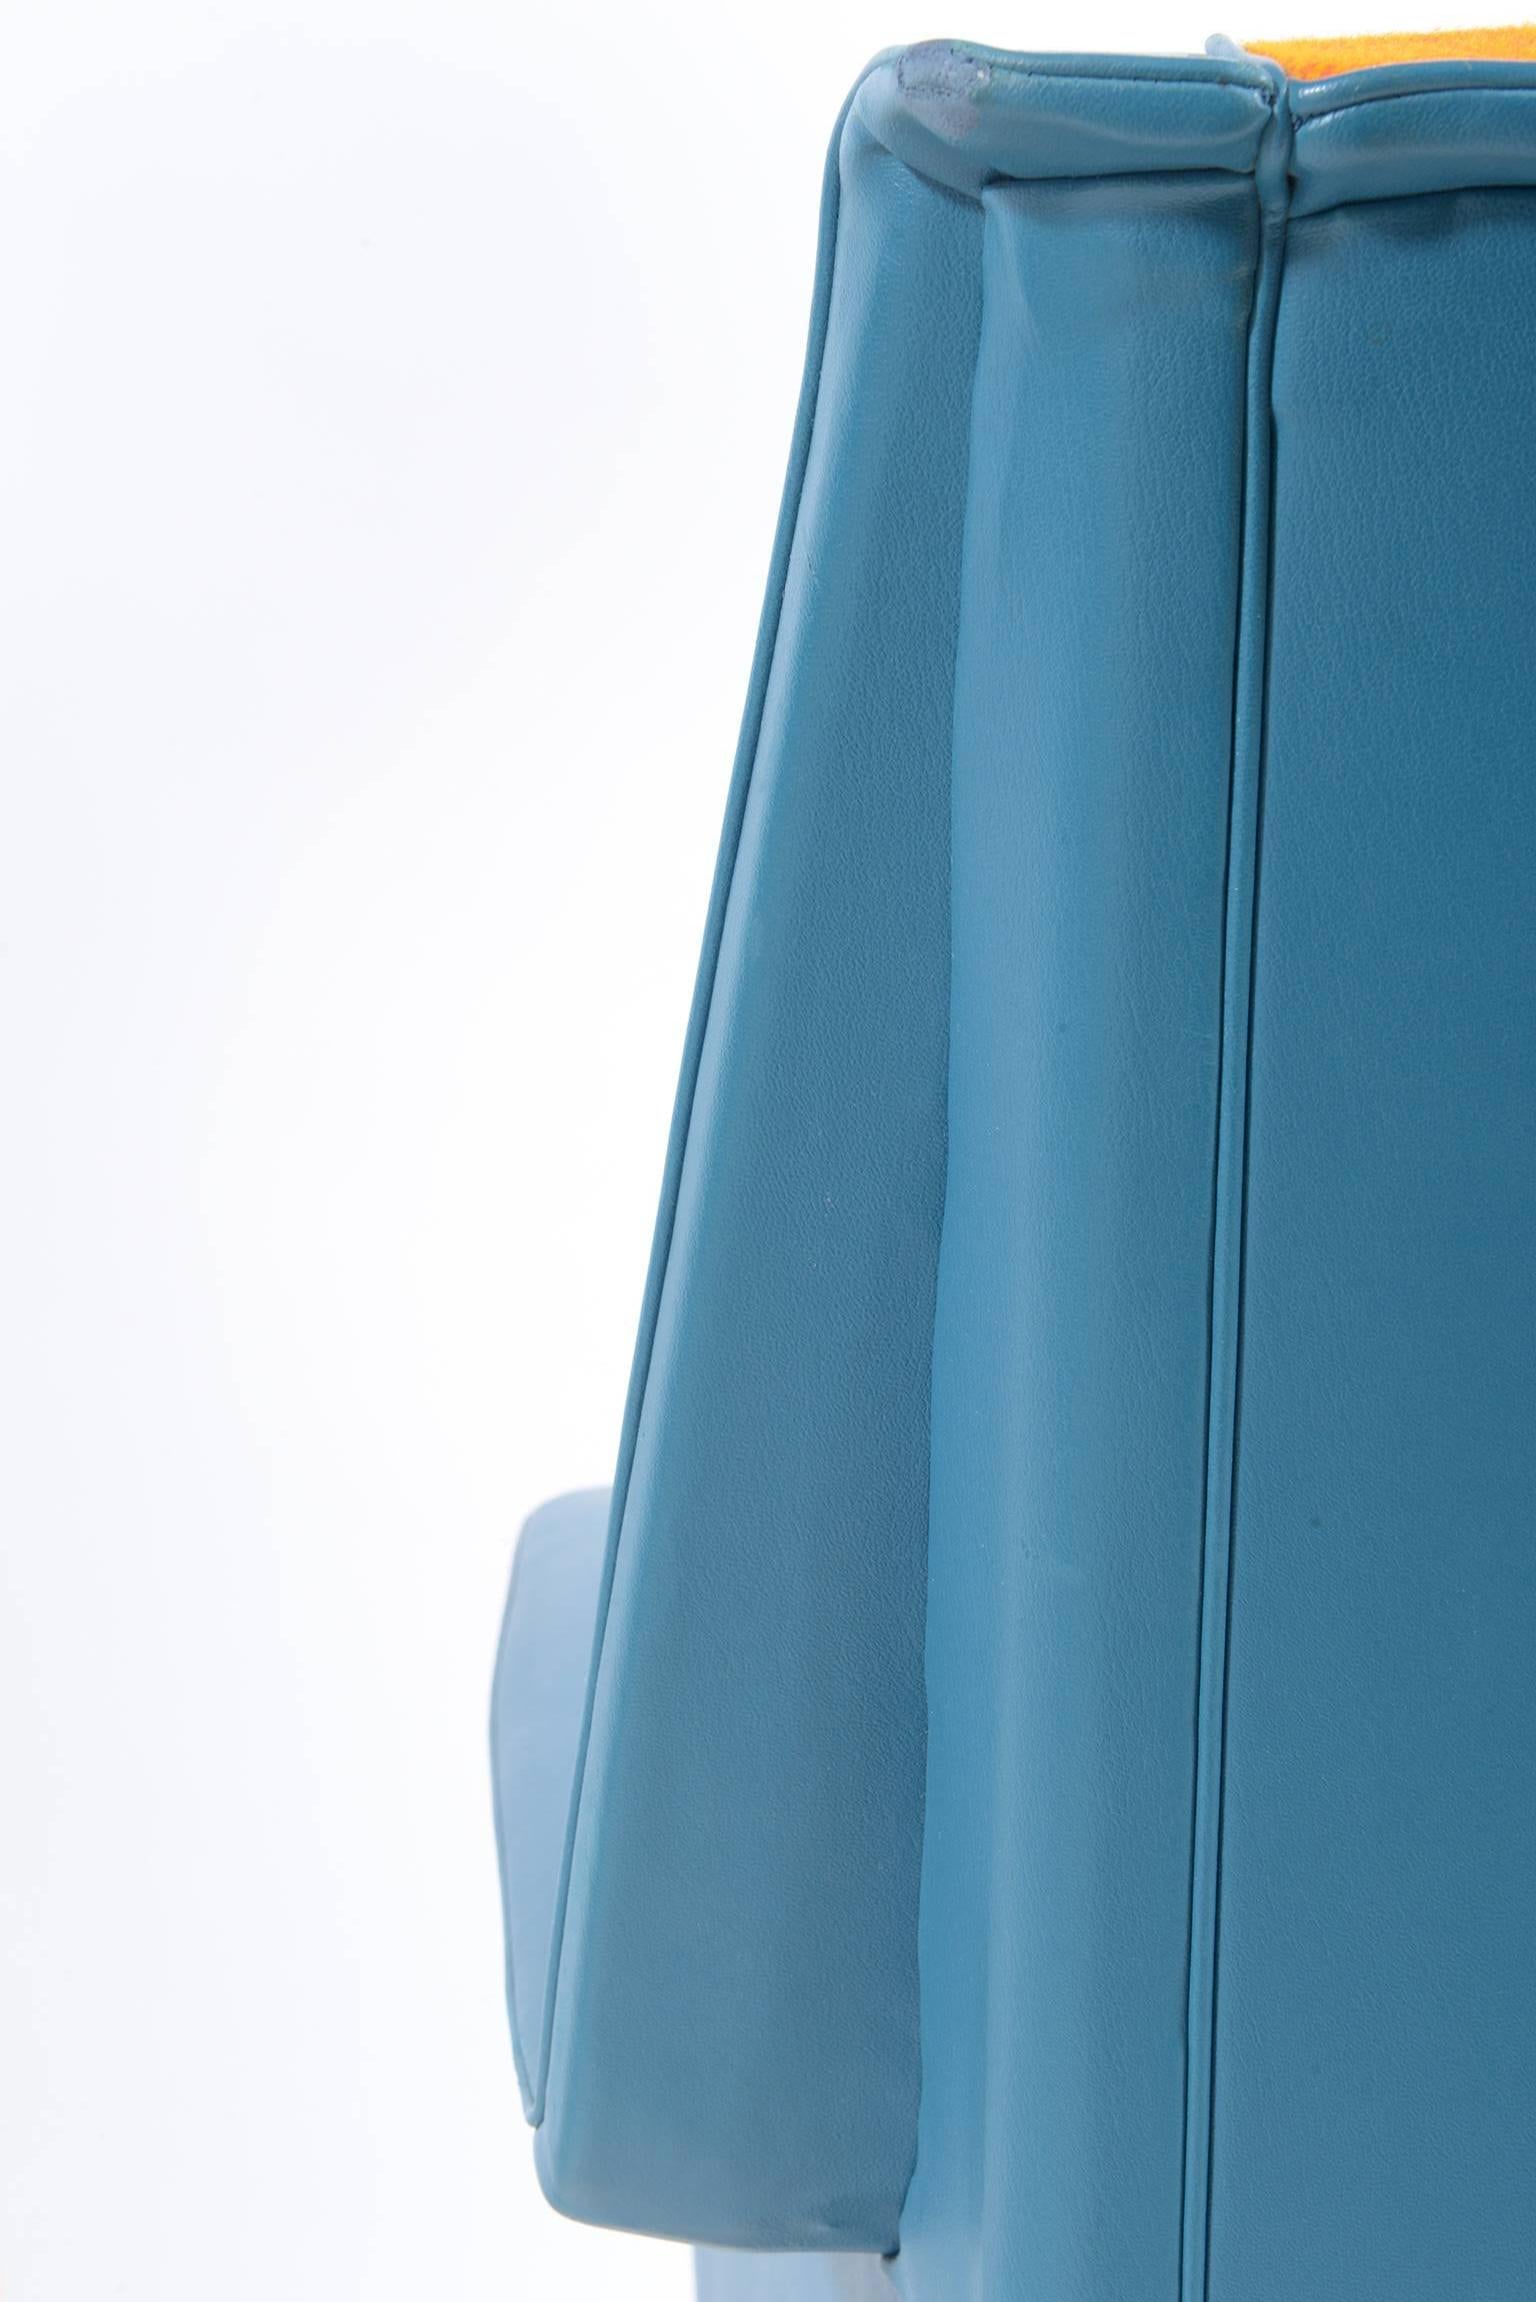 Castelli Signed Midcentury Pair of Armchairs Original Orange-Bleu Upholstery For Sale 3